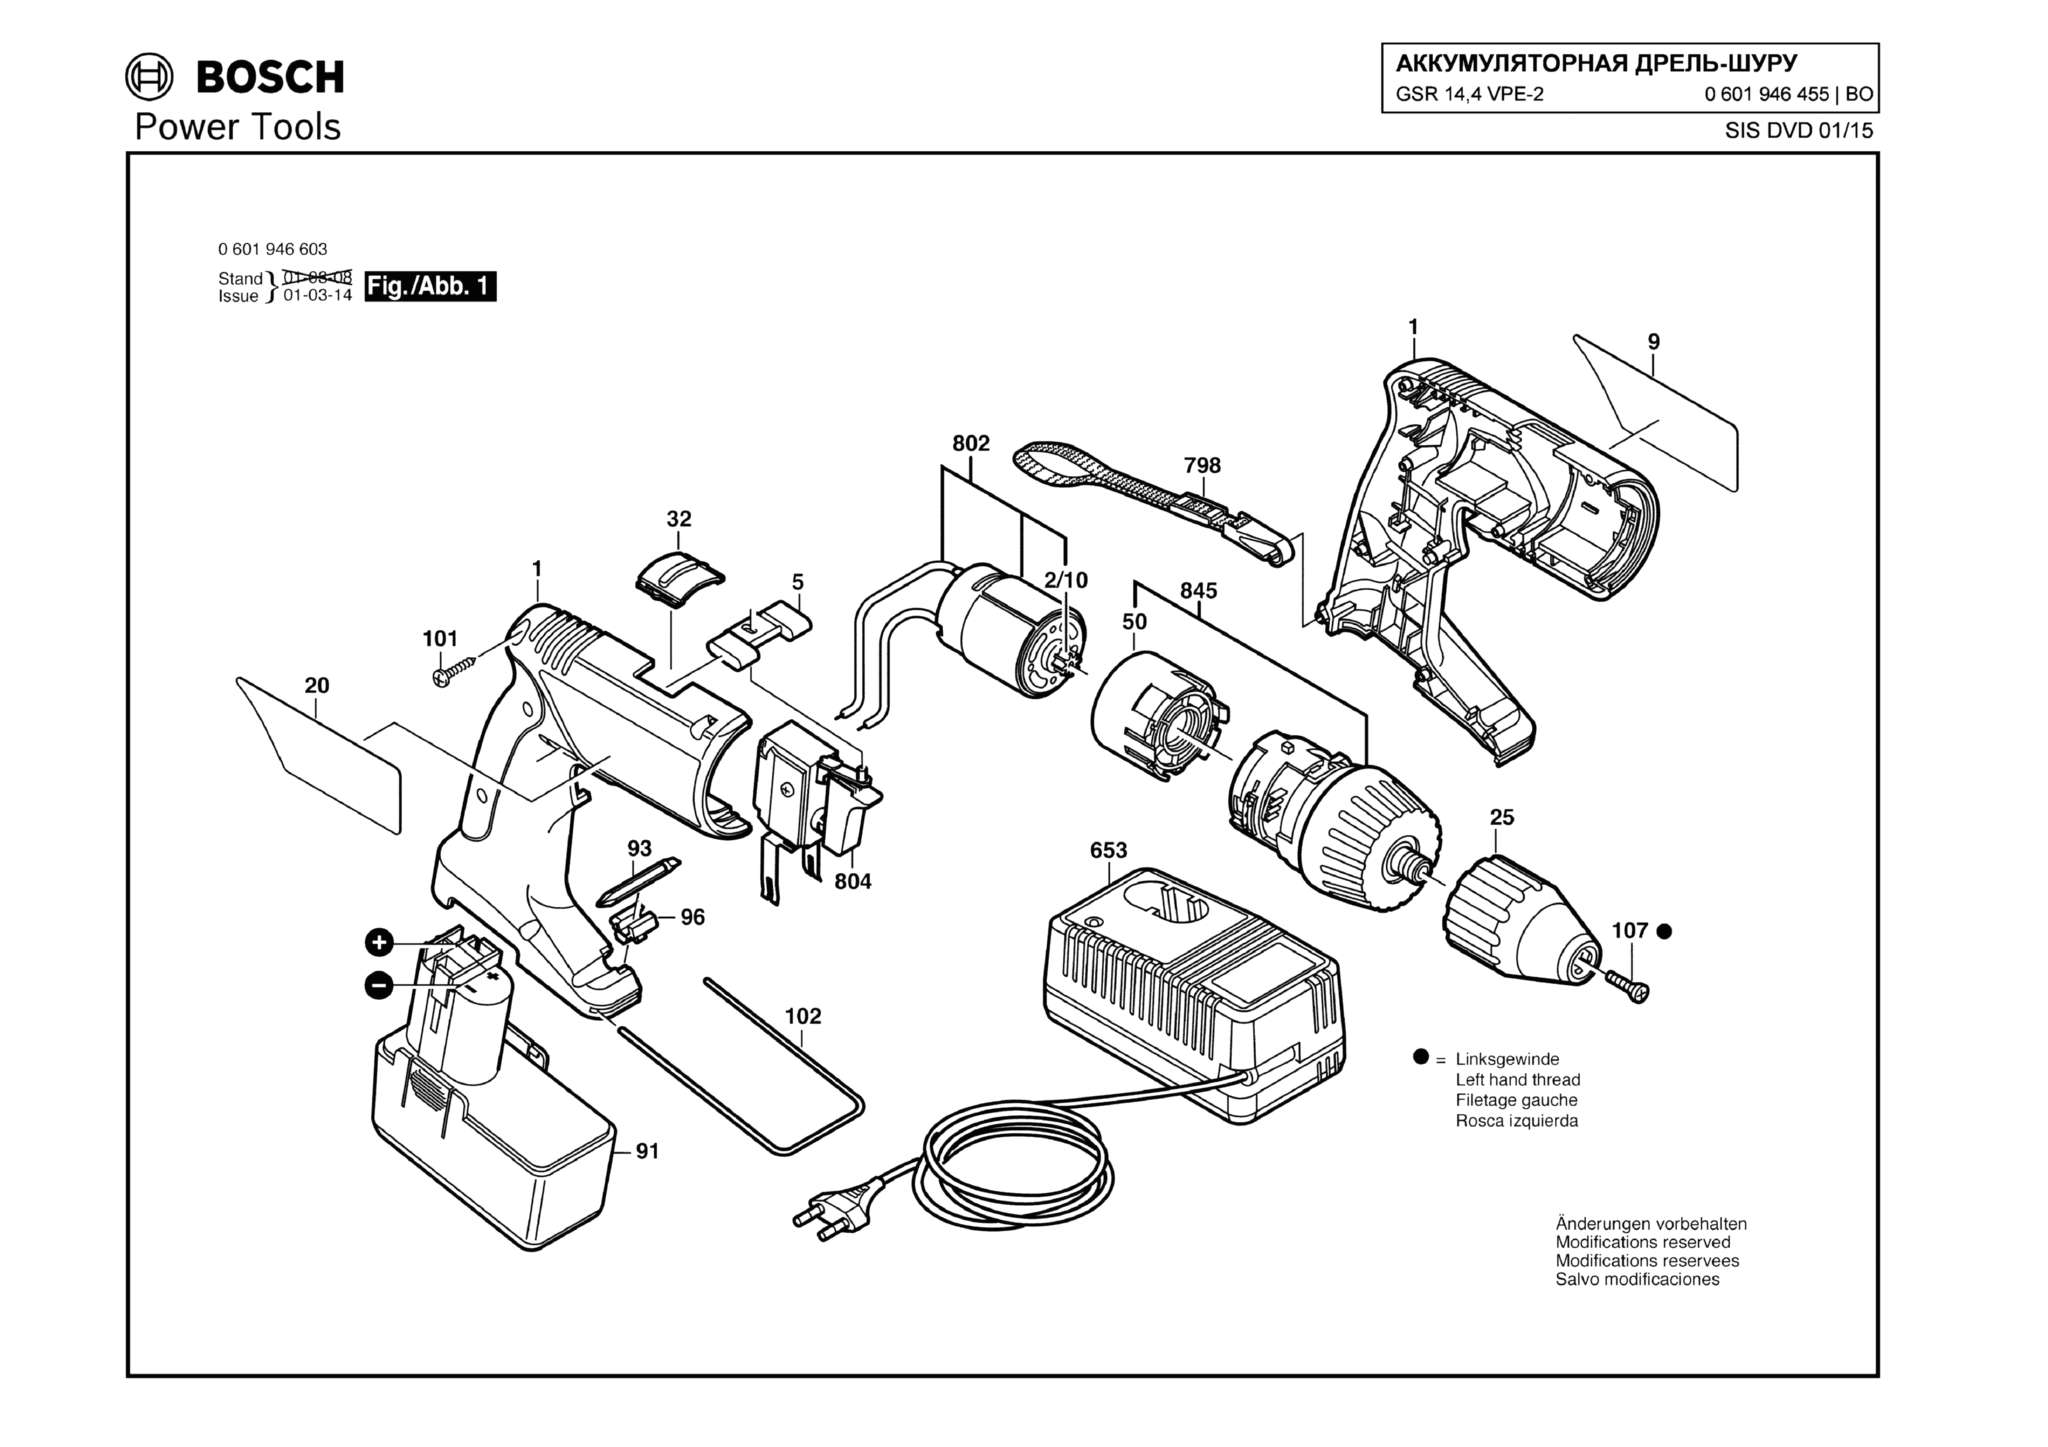 Запчасти, схема и деталировка Bosch GSR 14,4 VPE-2 (ТИП 0601946455)